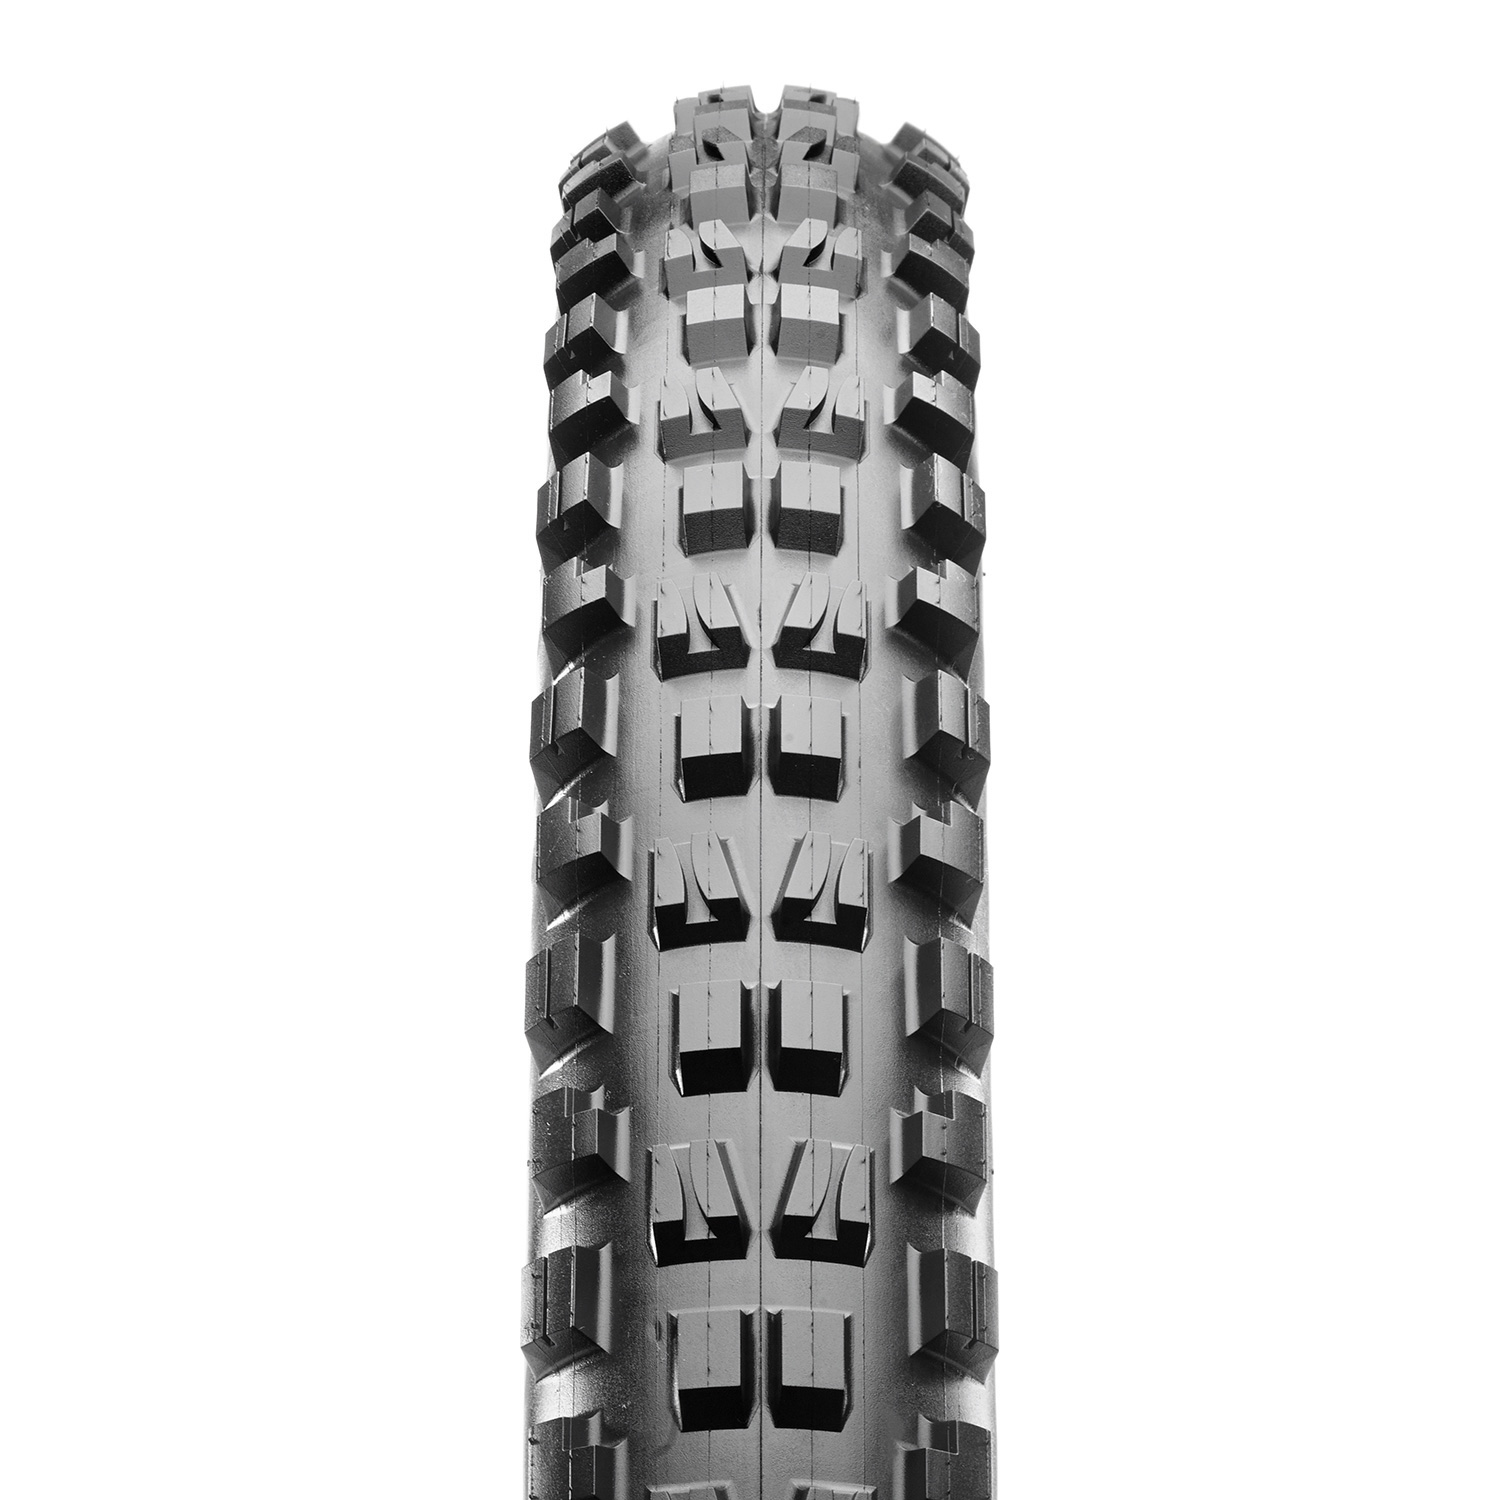 27.5 x 2.30 Minion DHF 3C Terra EXO TR Folding 60TPI Maxxis Bike Tyre